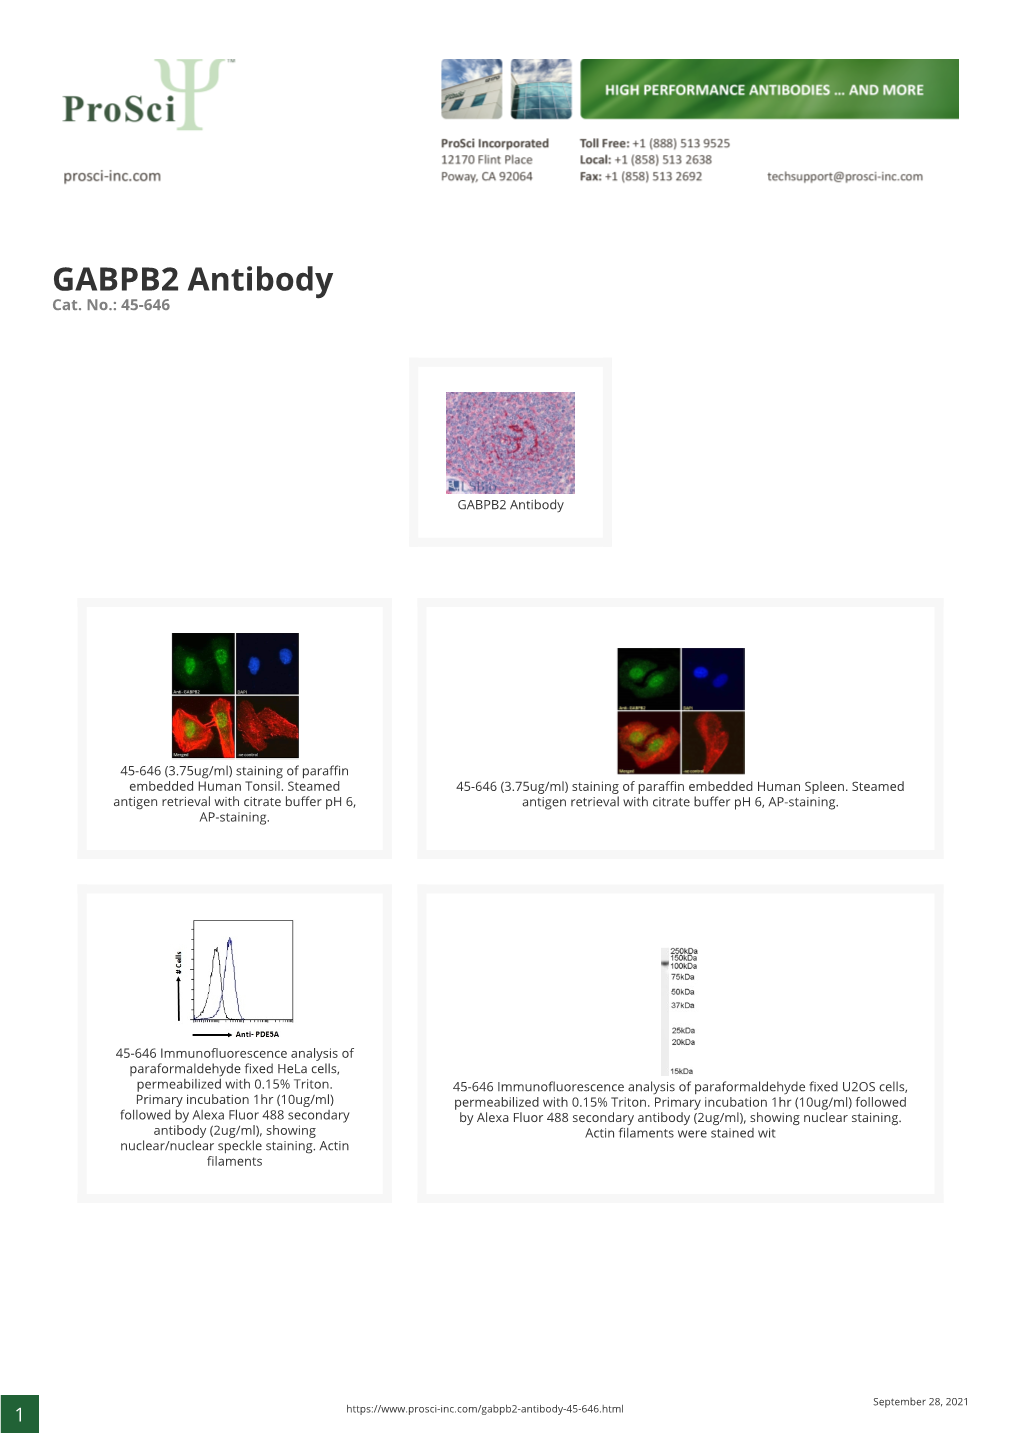 GABPB2 Antibody Cat